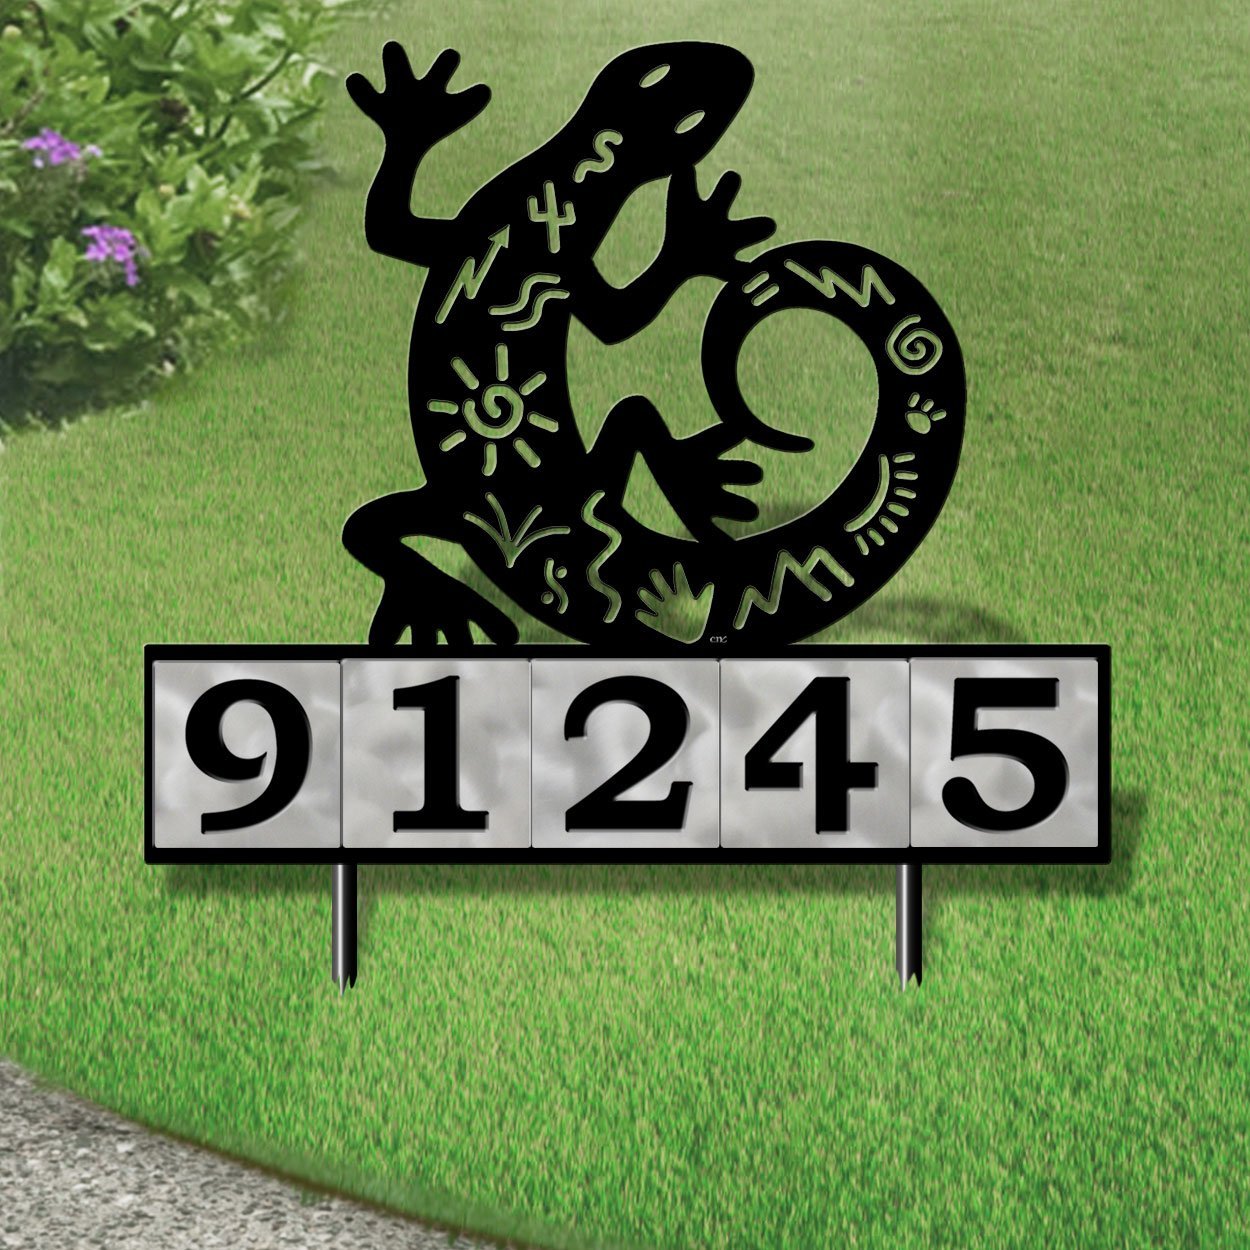 610095 - Petroglyph Lizard Design 5-Digit Horizontal 6-inch Tile Outdoor House Numbers Yard Sign